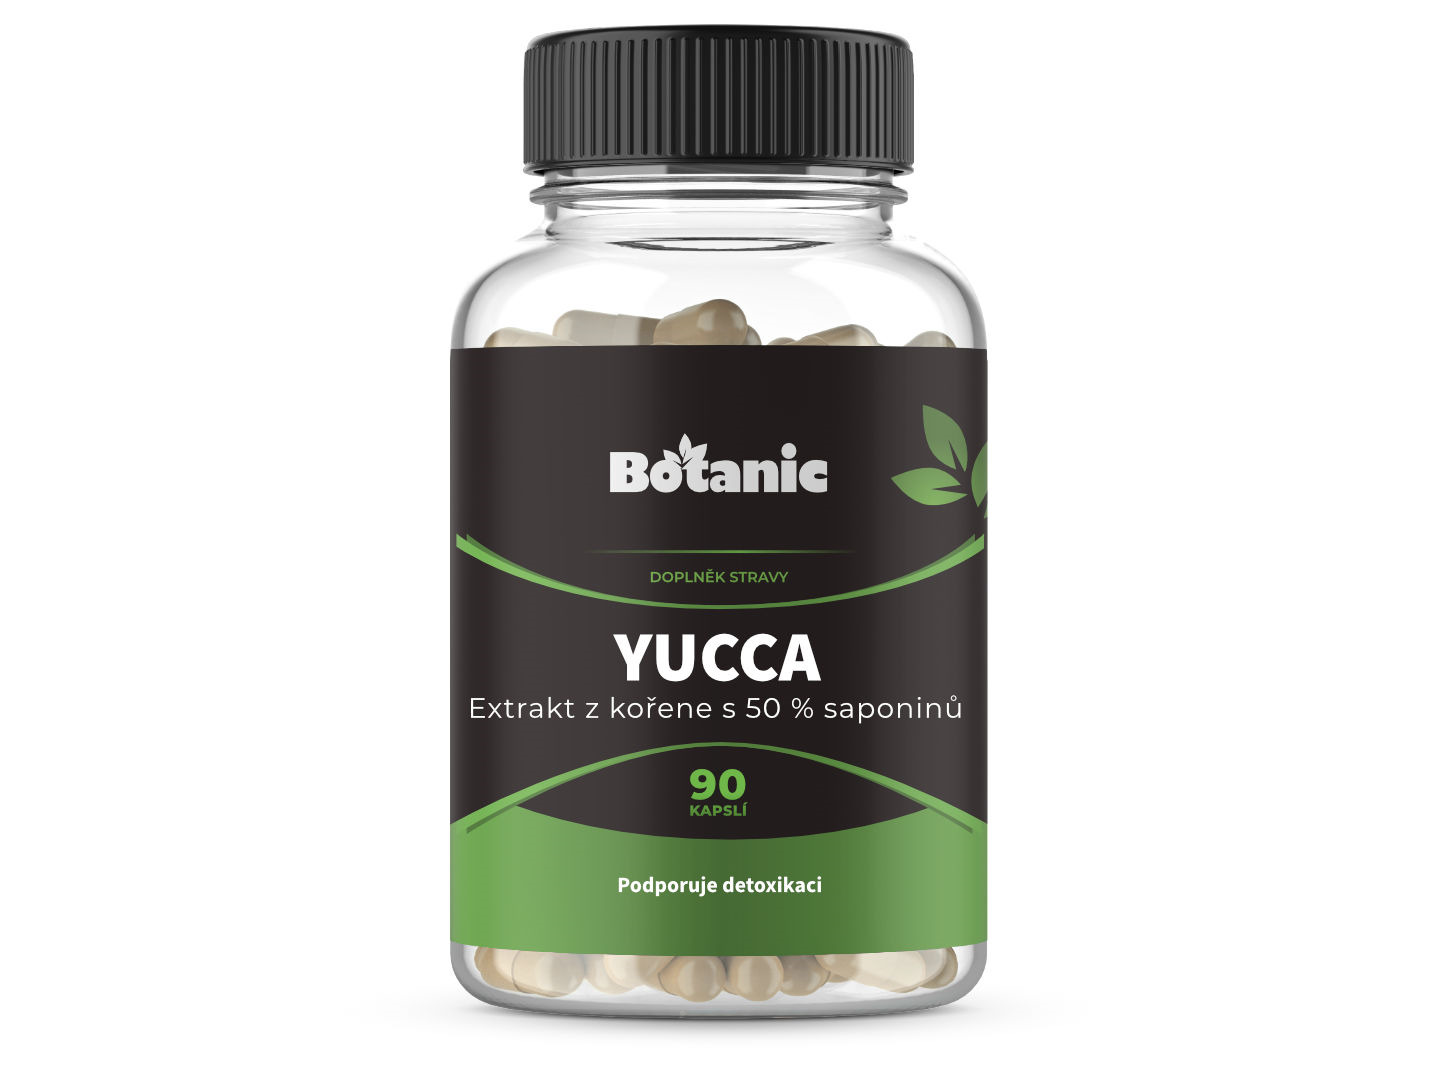 Botanic Yucca - Extrakt z kořene s 50 % saponinů kapsle 90kap.